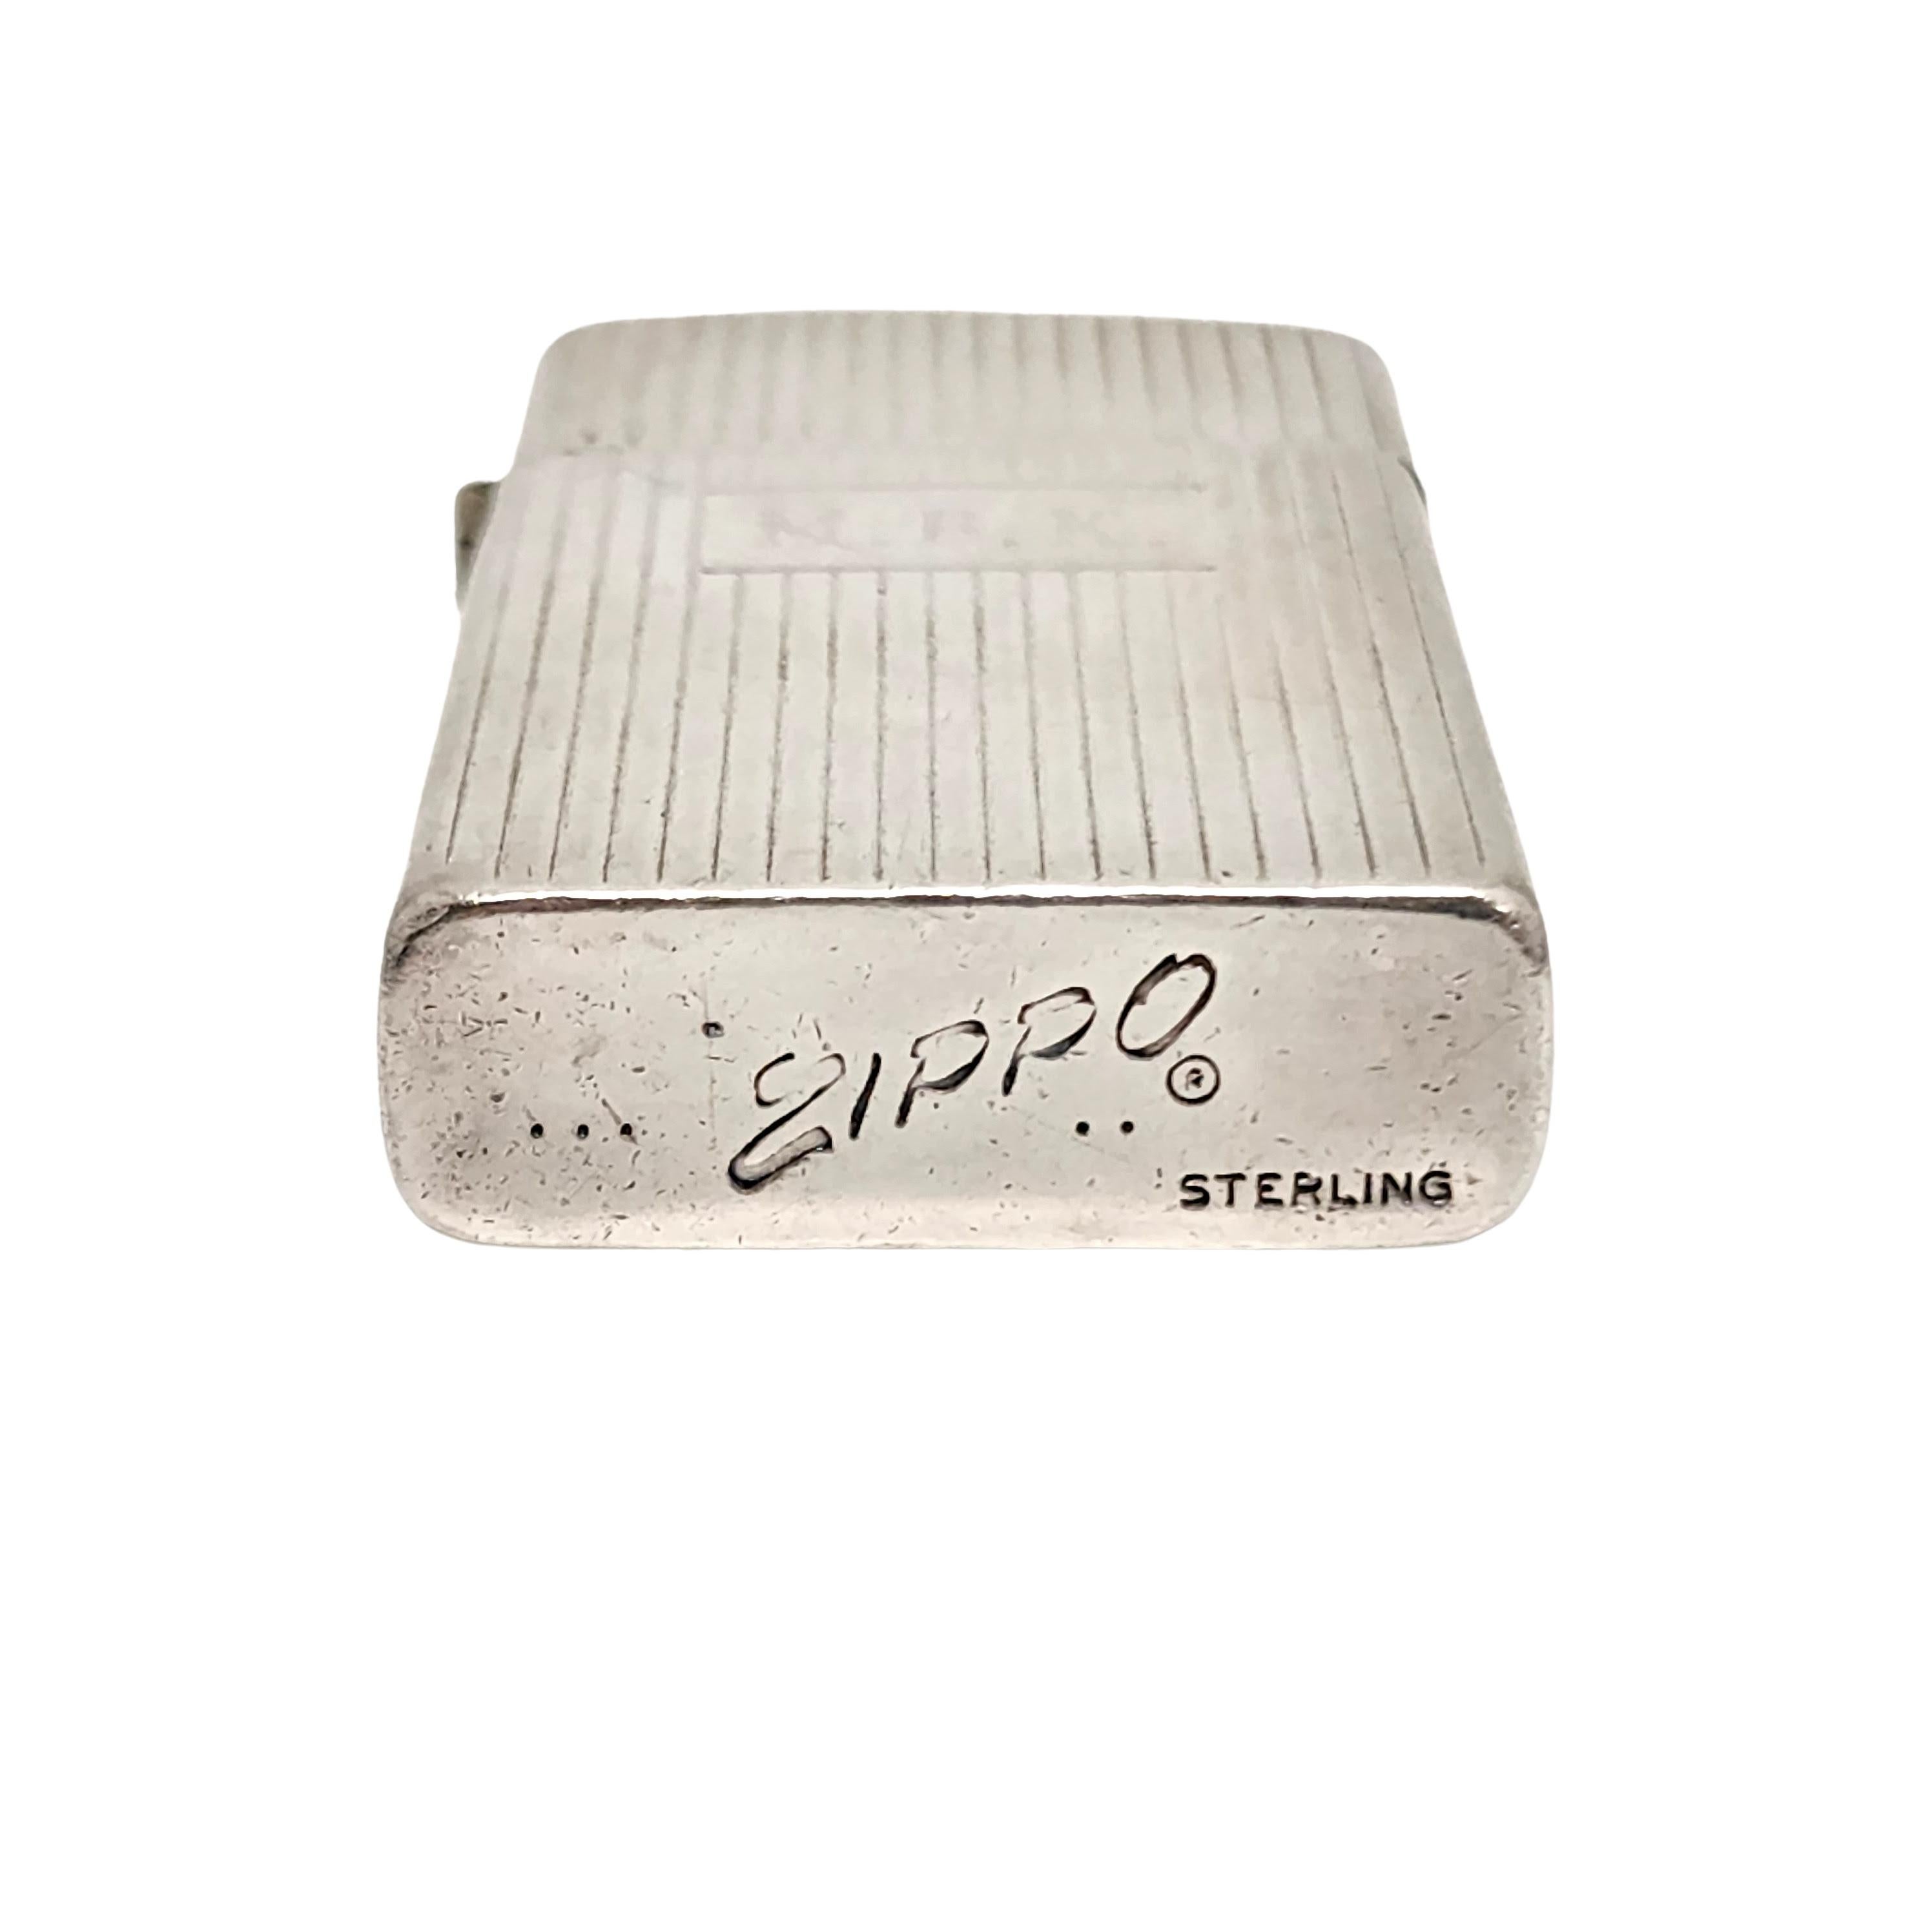 Zippo Sterling Silver Engine Turned Slim Lighter Case Holder w/ Monogram #13040 For Sale 3